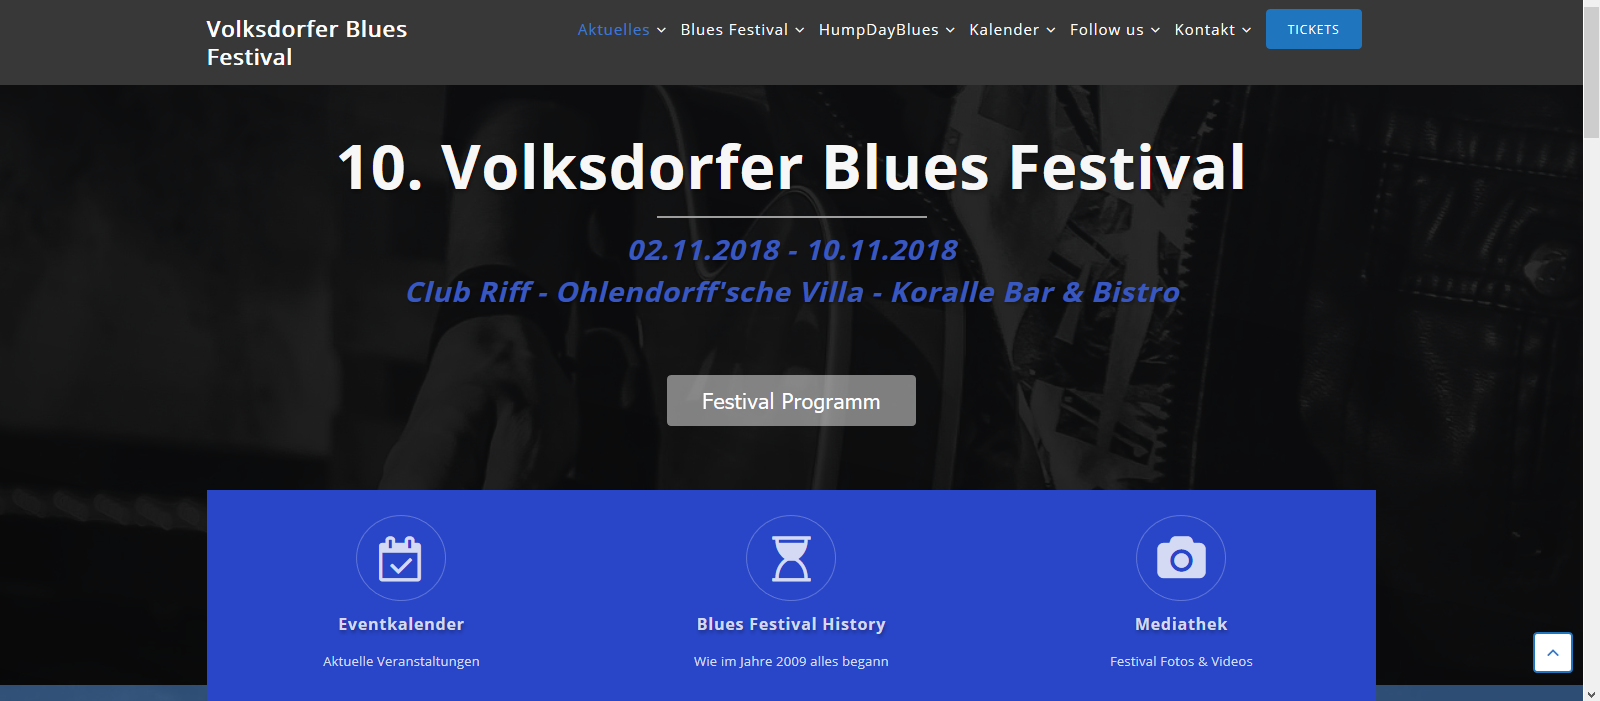 Die neue Homepage vom Volksdorfer Blues Festival